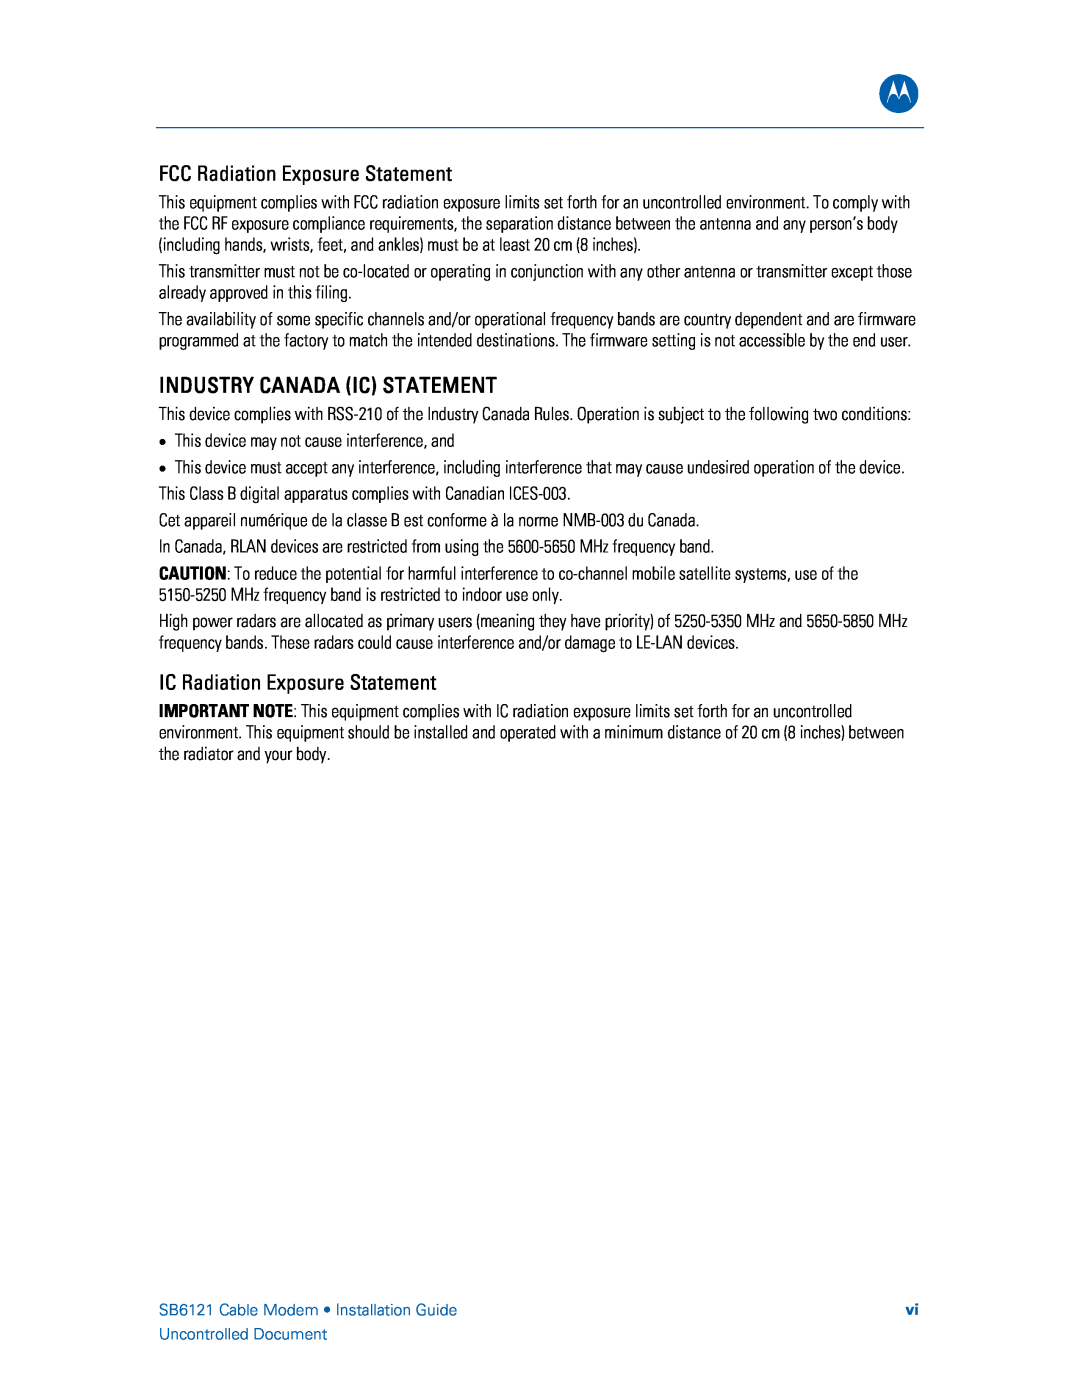 Motorola SB6121 manual FCC Radiation Exposure Statement, Industry Canada Ic Statement, IC Radiation Exposure Statement 